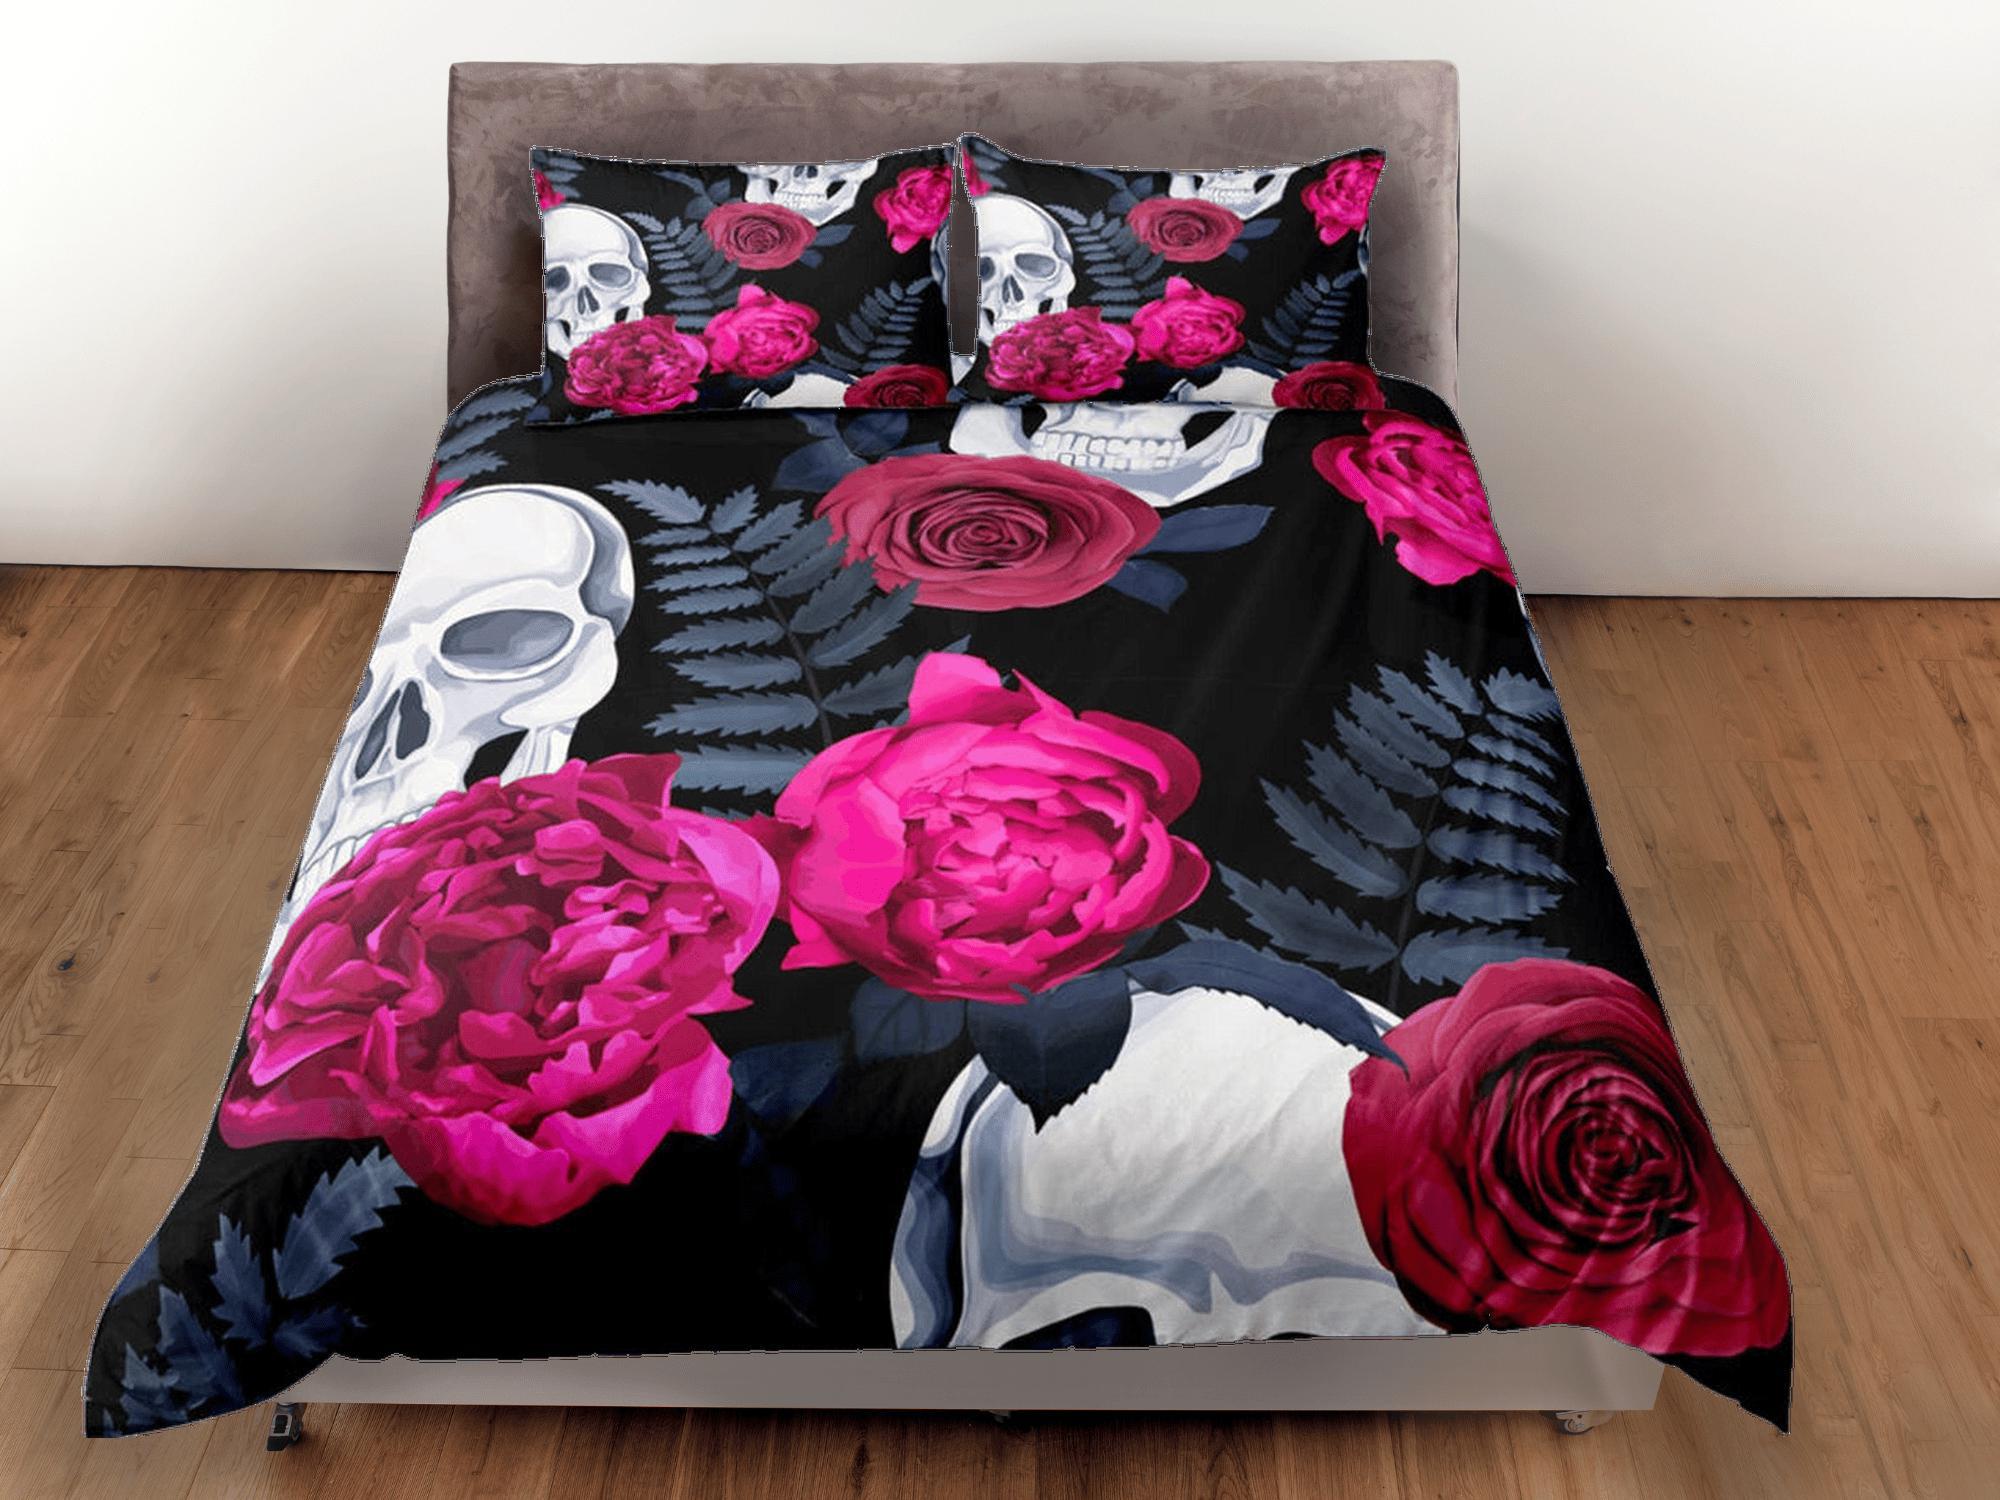 daintyduvet Skull and Roses Black Duvet Cover Set Gothic Bedspread Dorm Bedding with Pillowcase, Comforter Cover